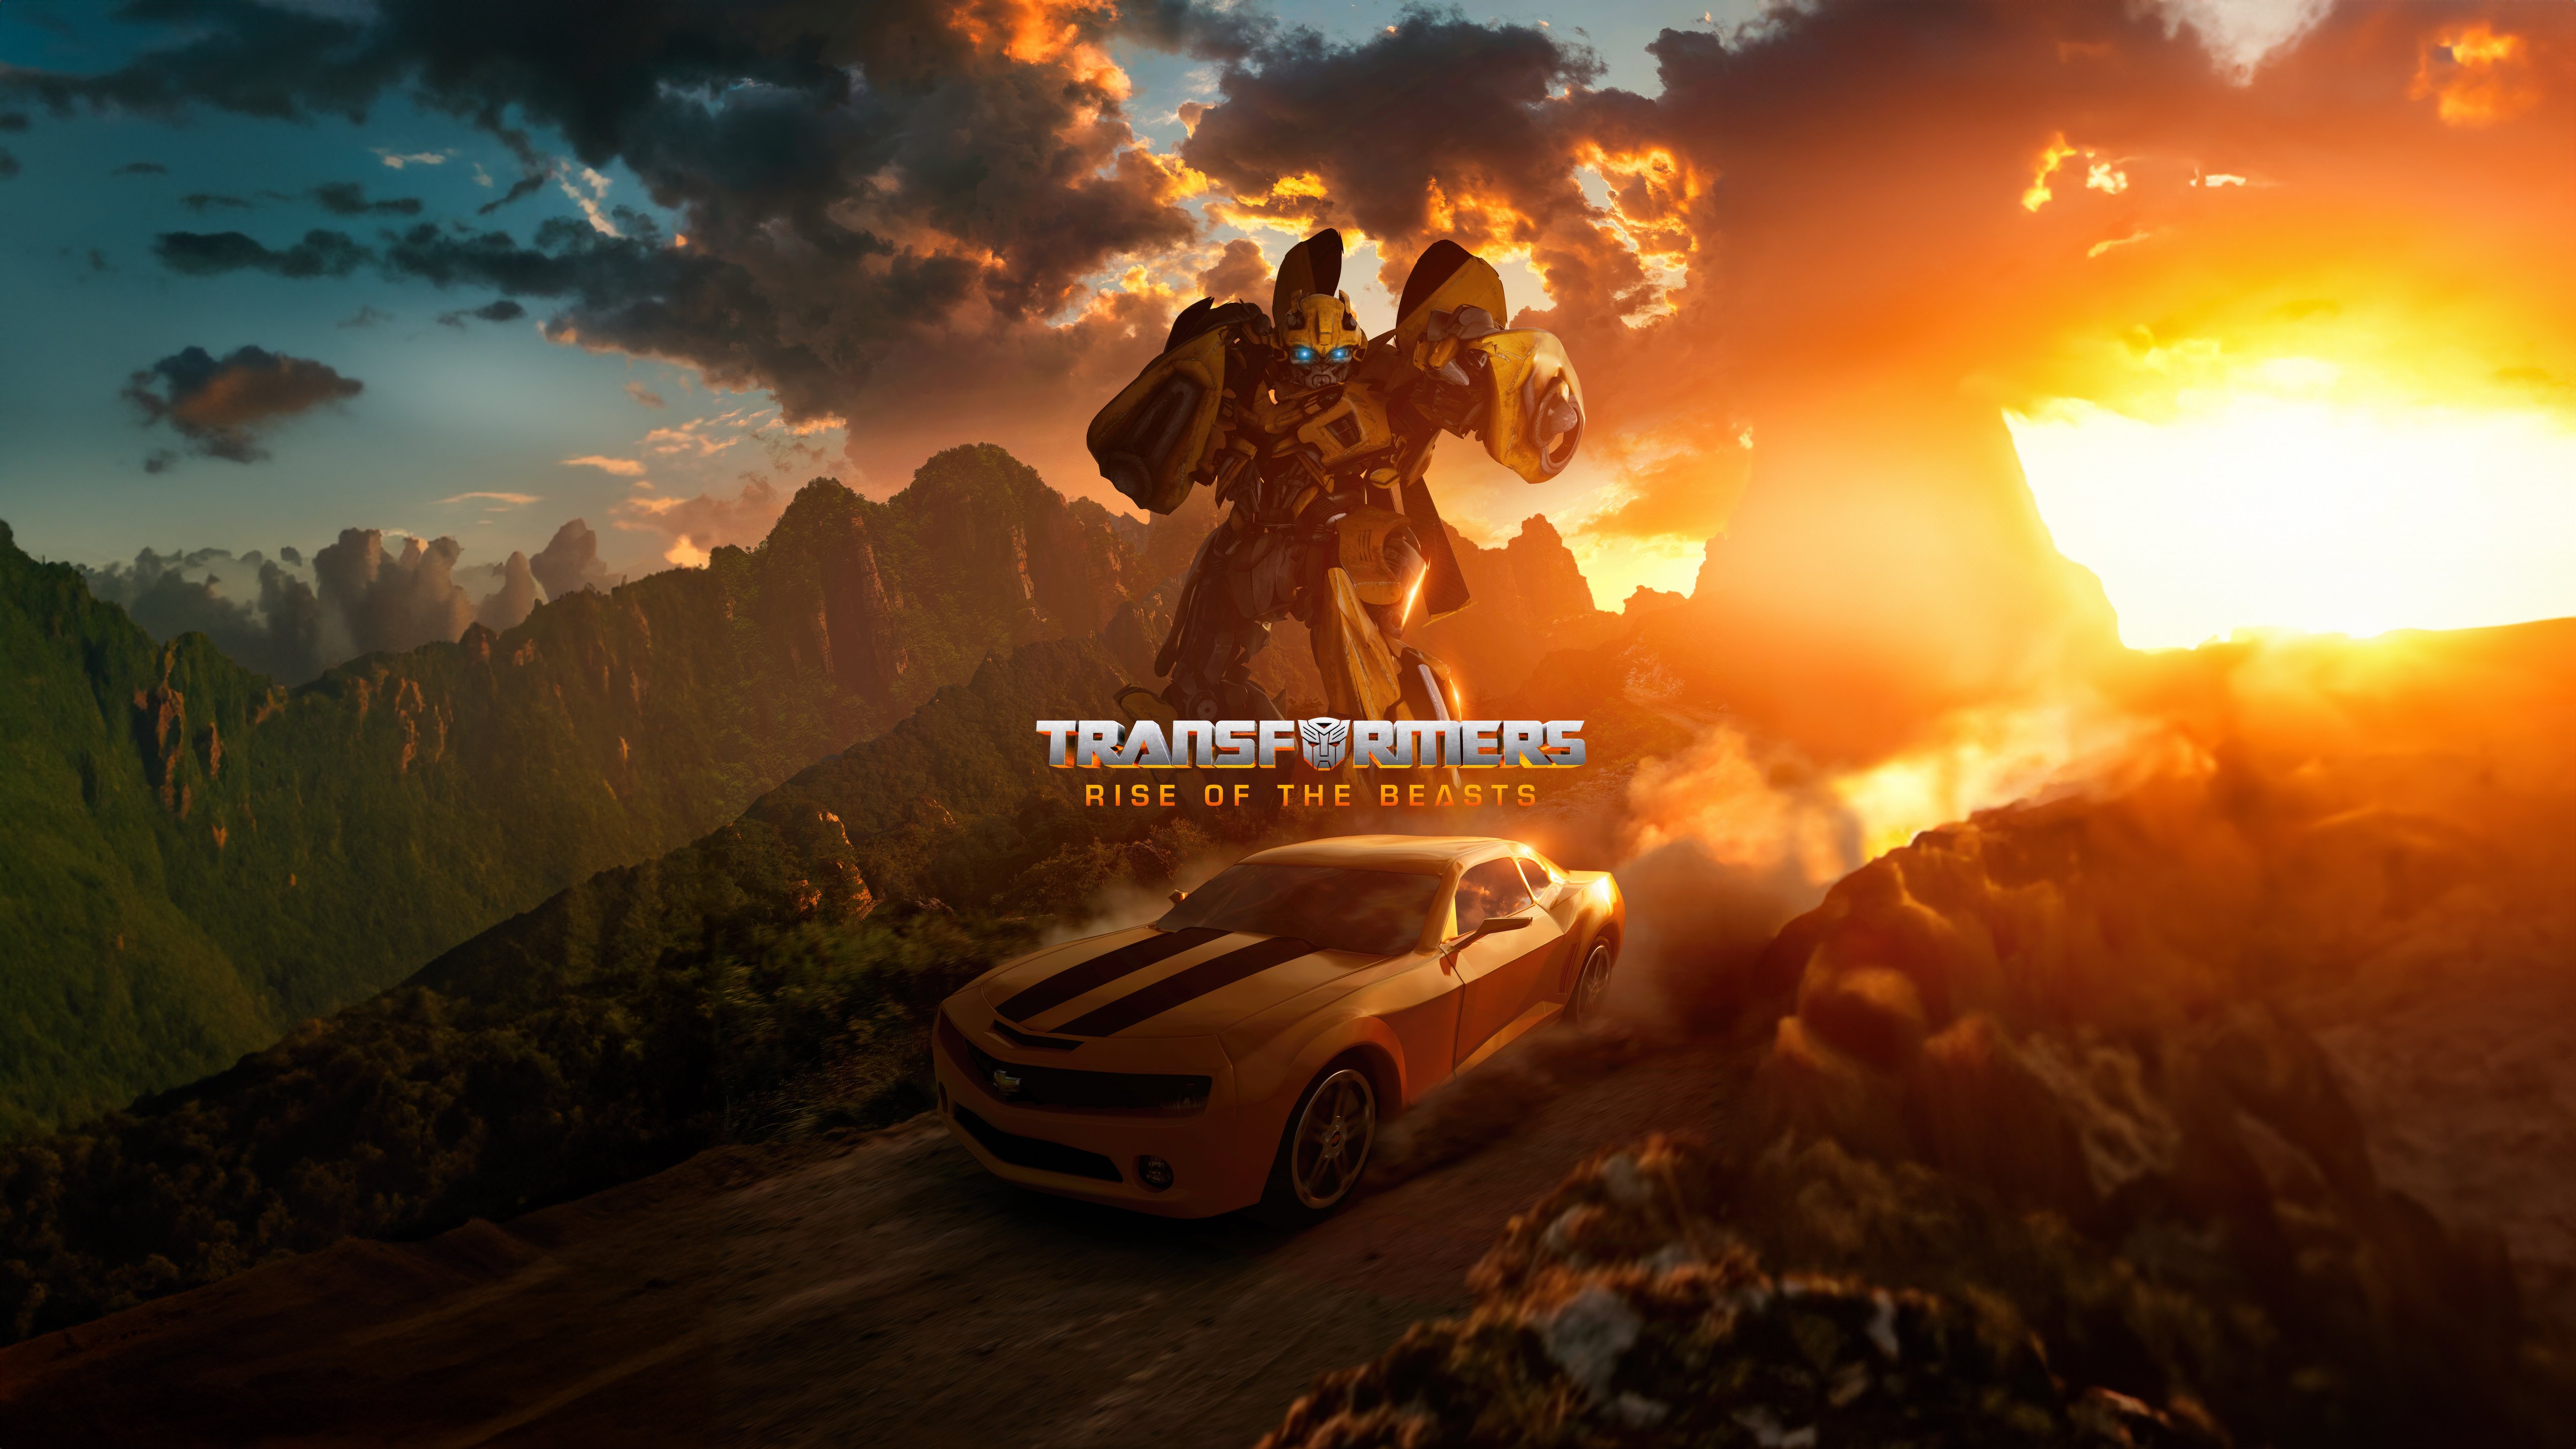 Fondos de pantalla Transformers Rise of the Beasts